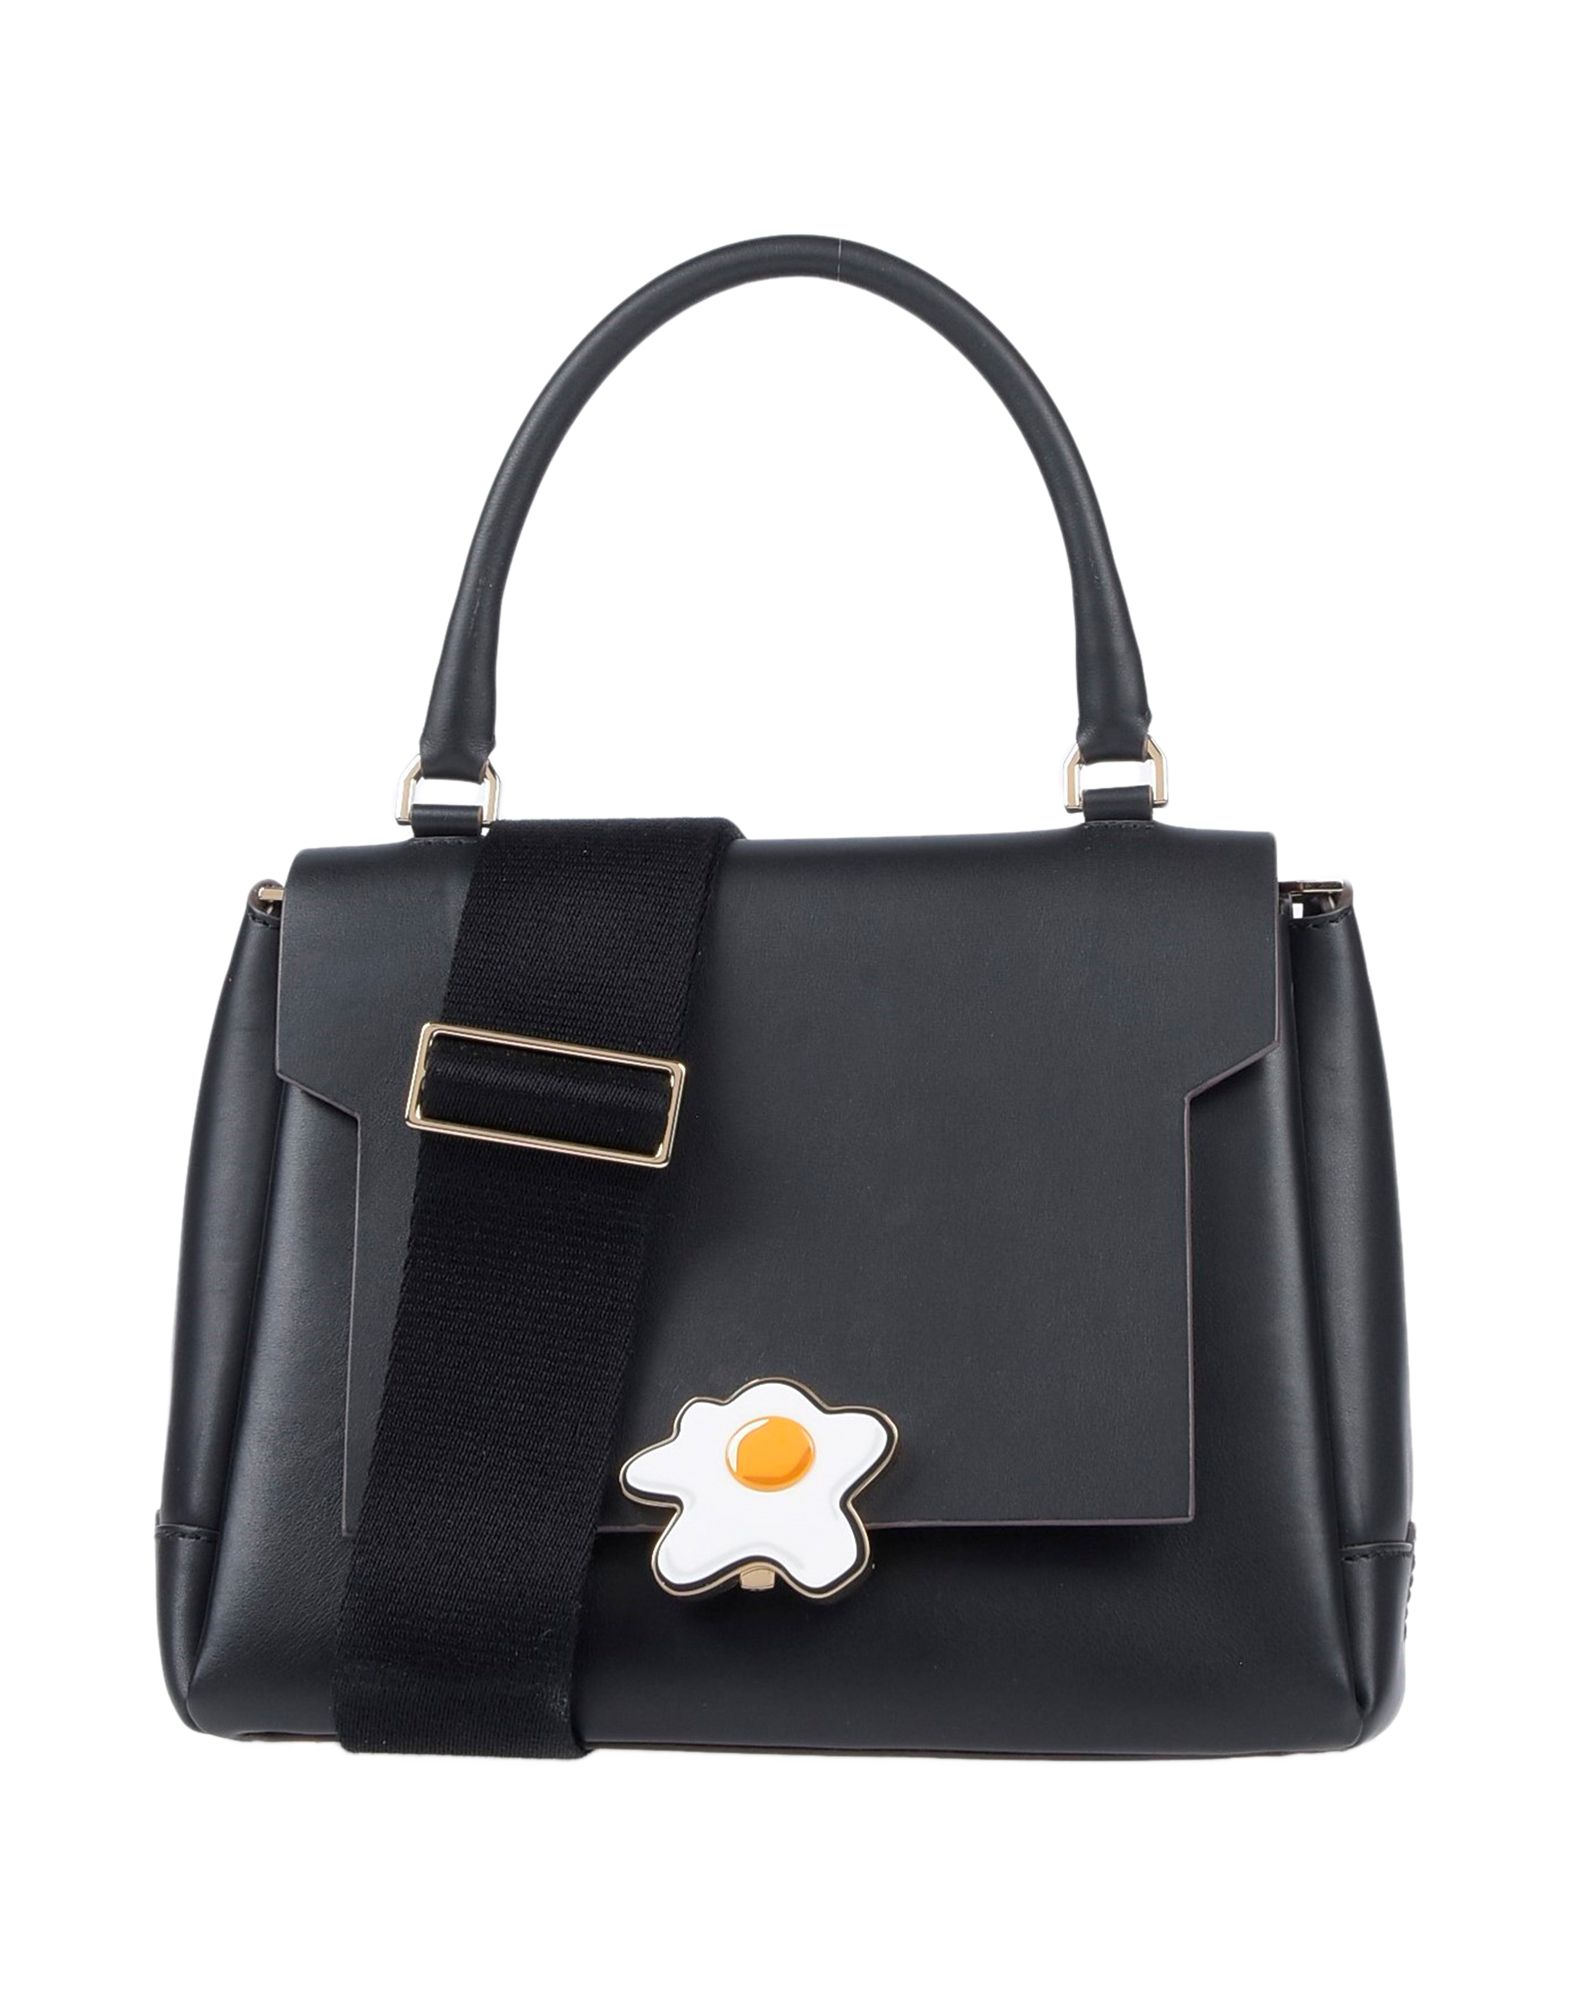 Anya Hindmarch Handbag In Black | ModeSens